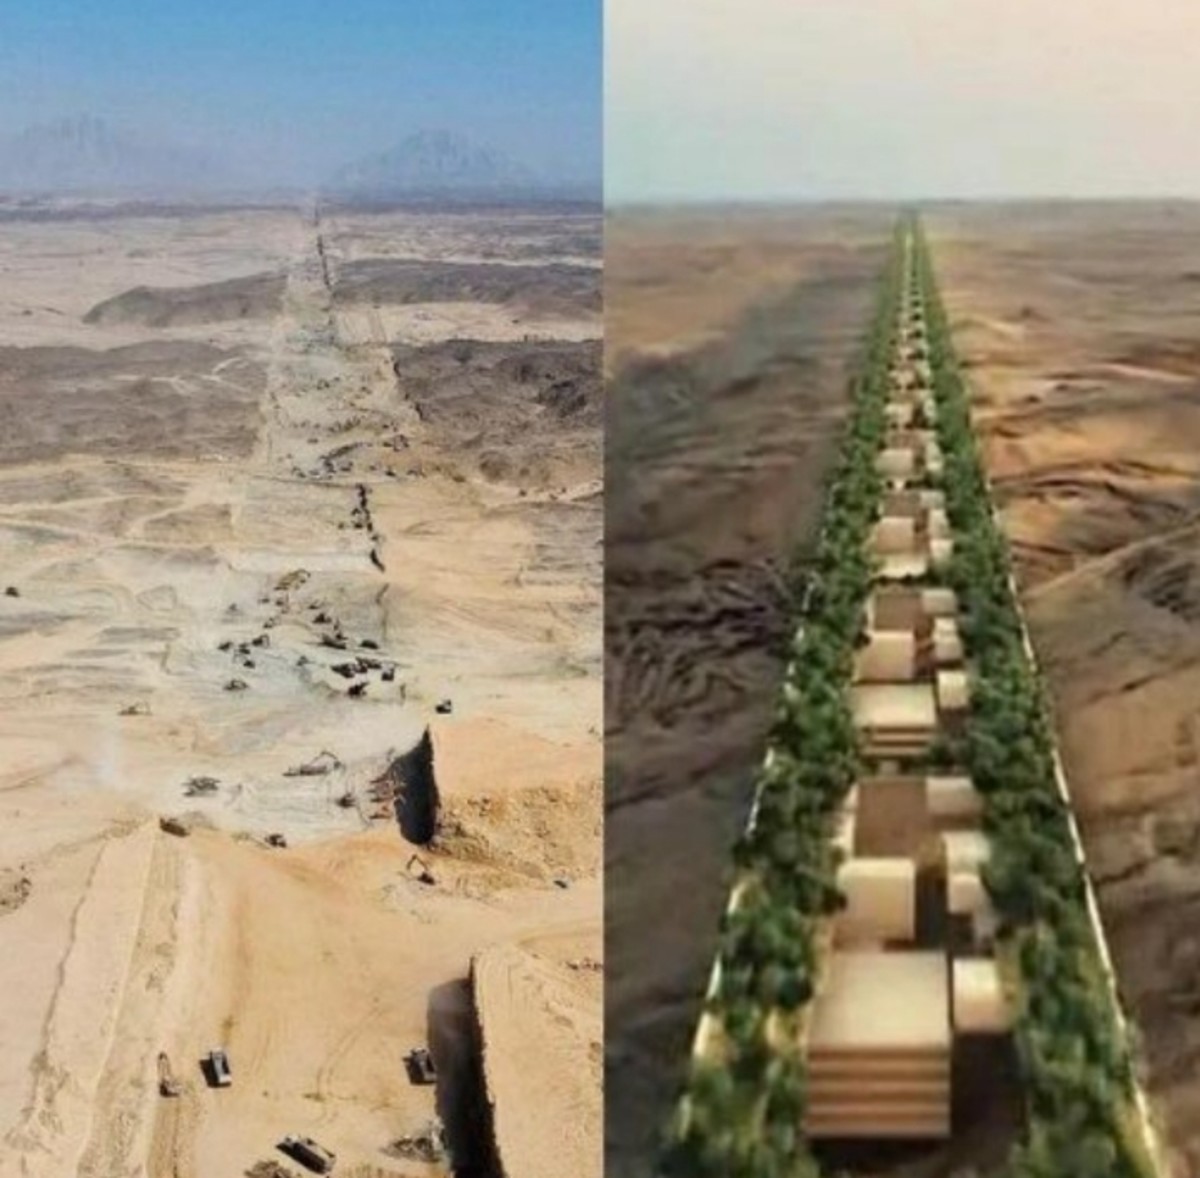 Saudi Arabia's Decision to Build Straight Line City is Uneconomic